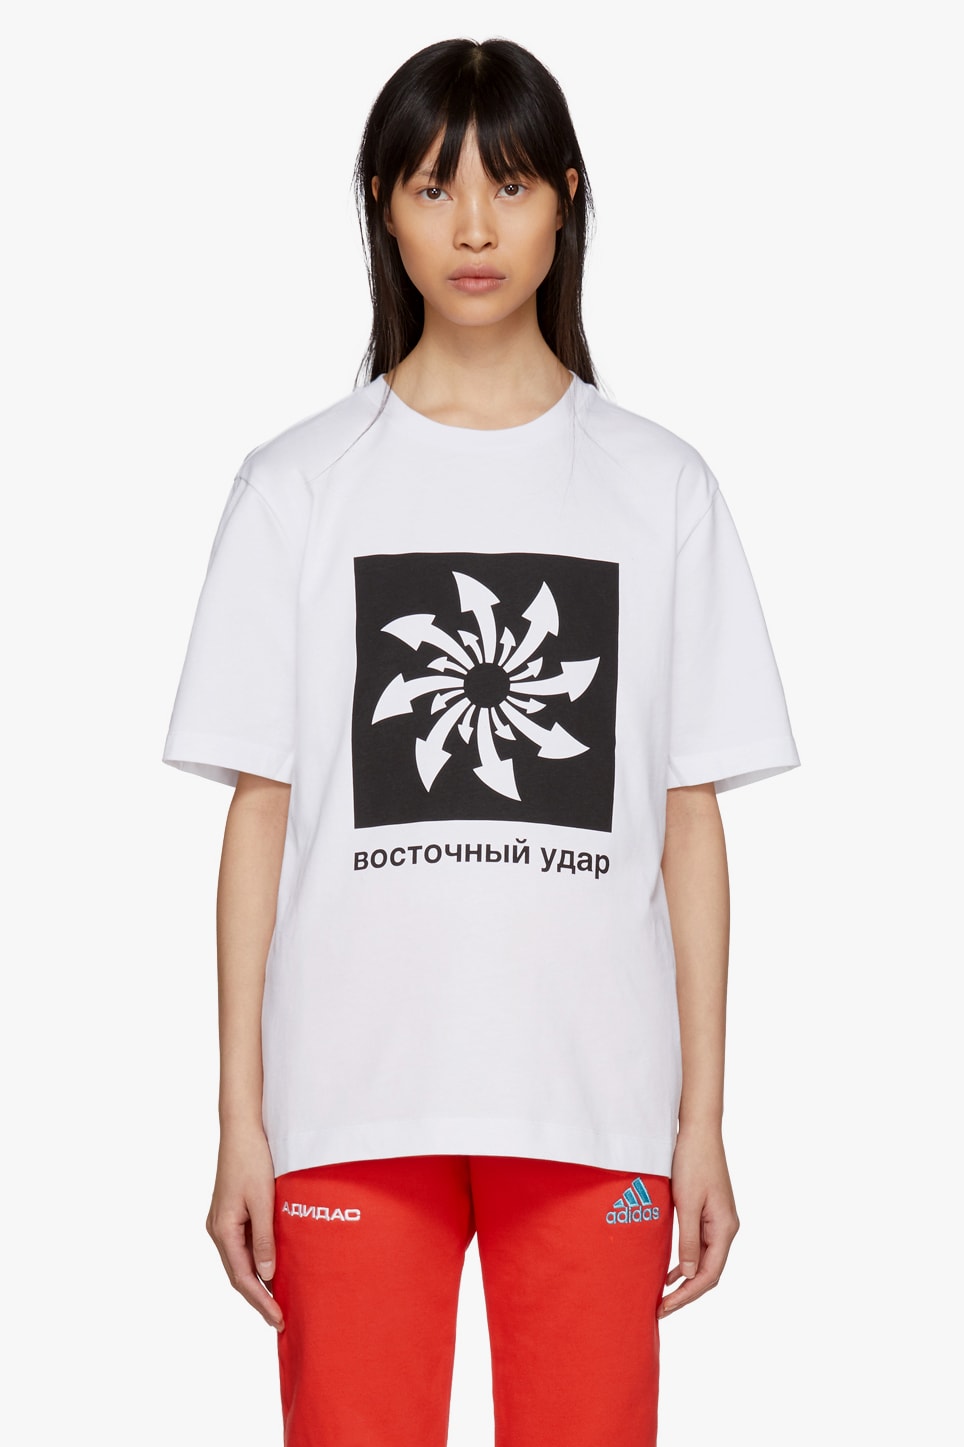 Gosha Rubchinskiy Spring/Summer New Arrivals Hoodie Sweater Sweatpants T-shirt Tshirt